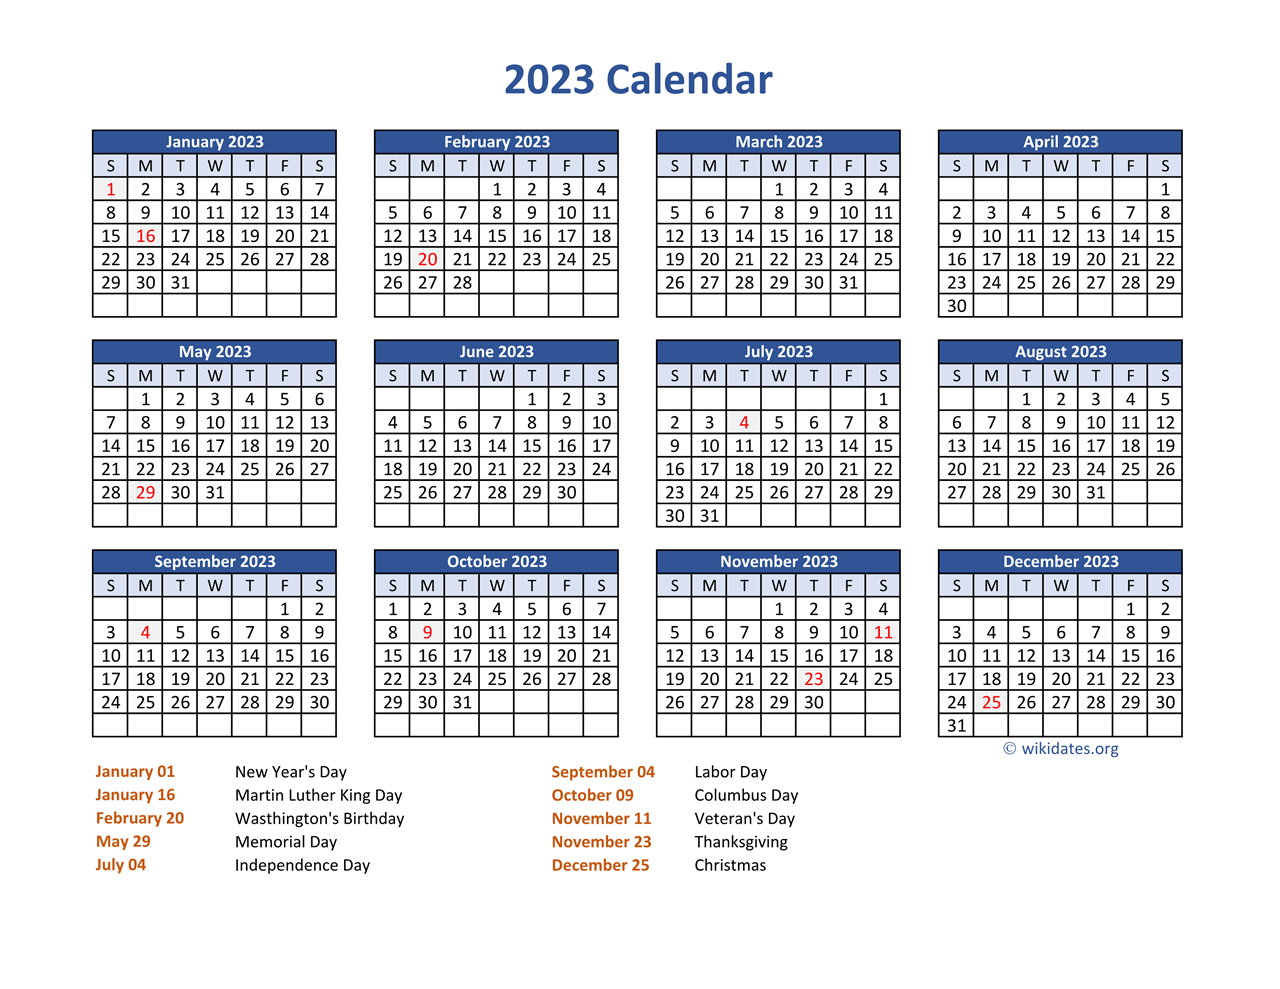 2023 united states calendar with holidays - 2023 united states calendar